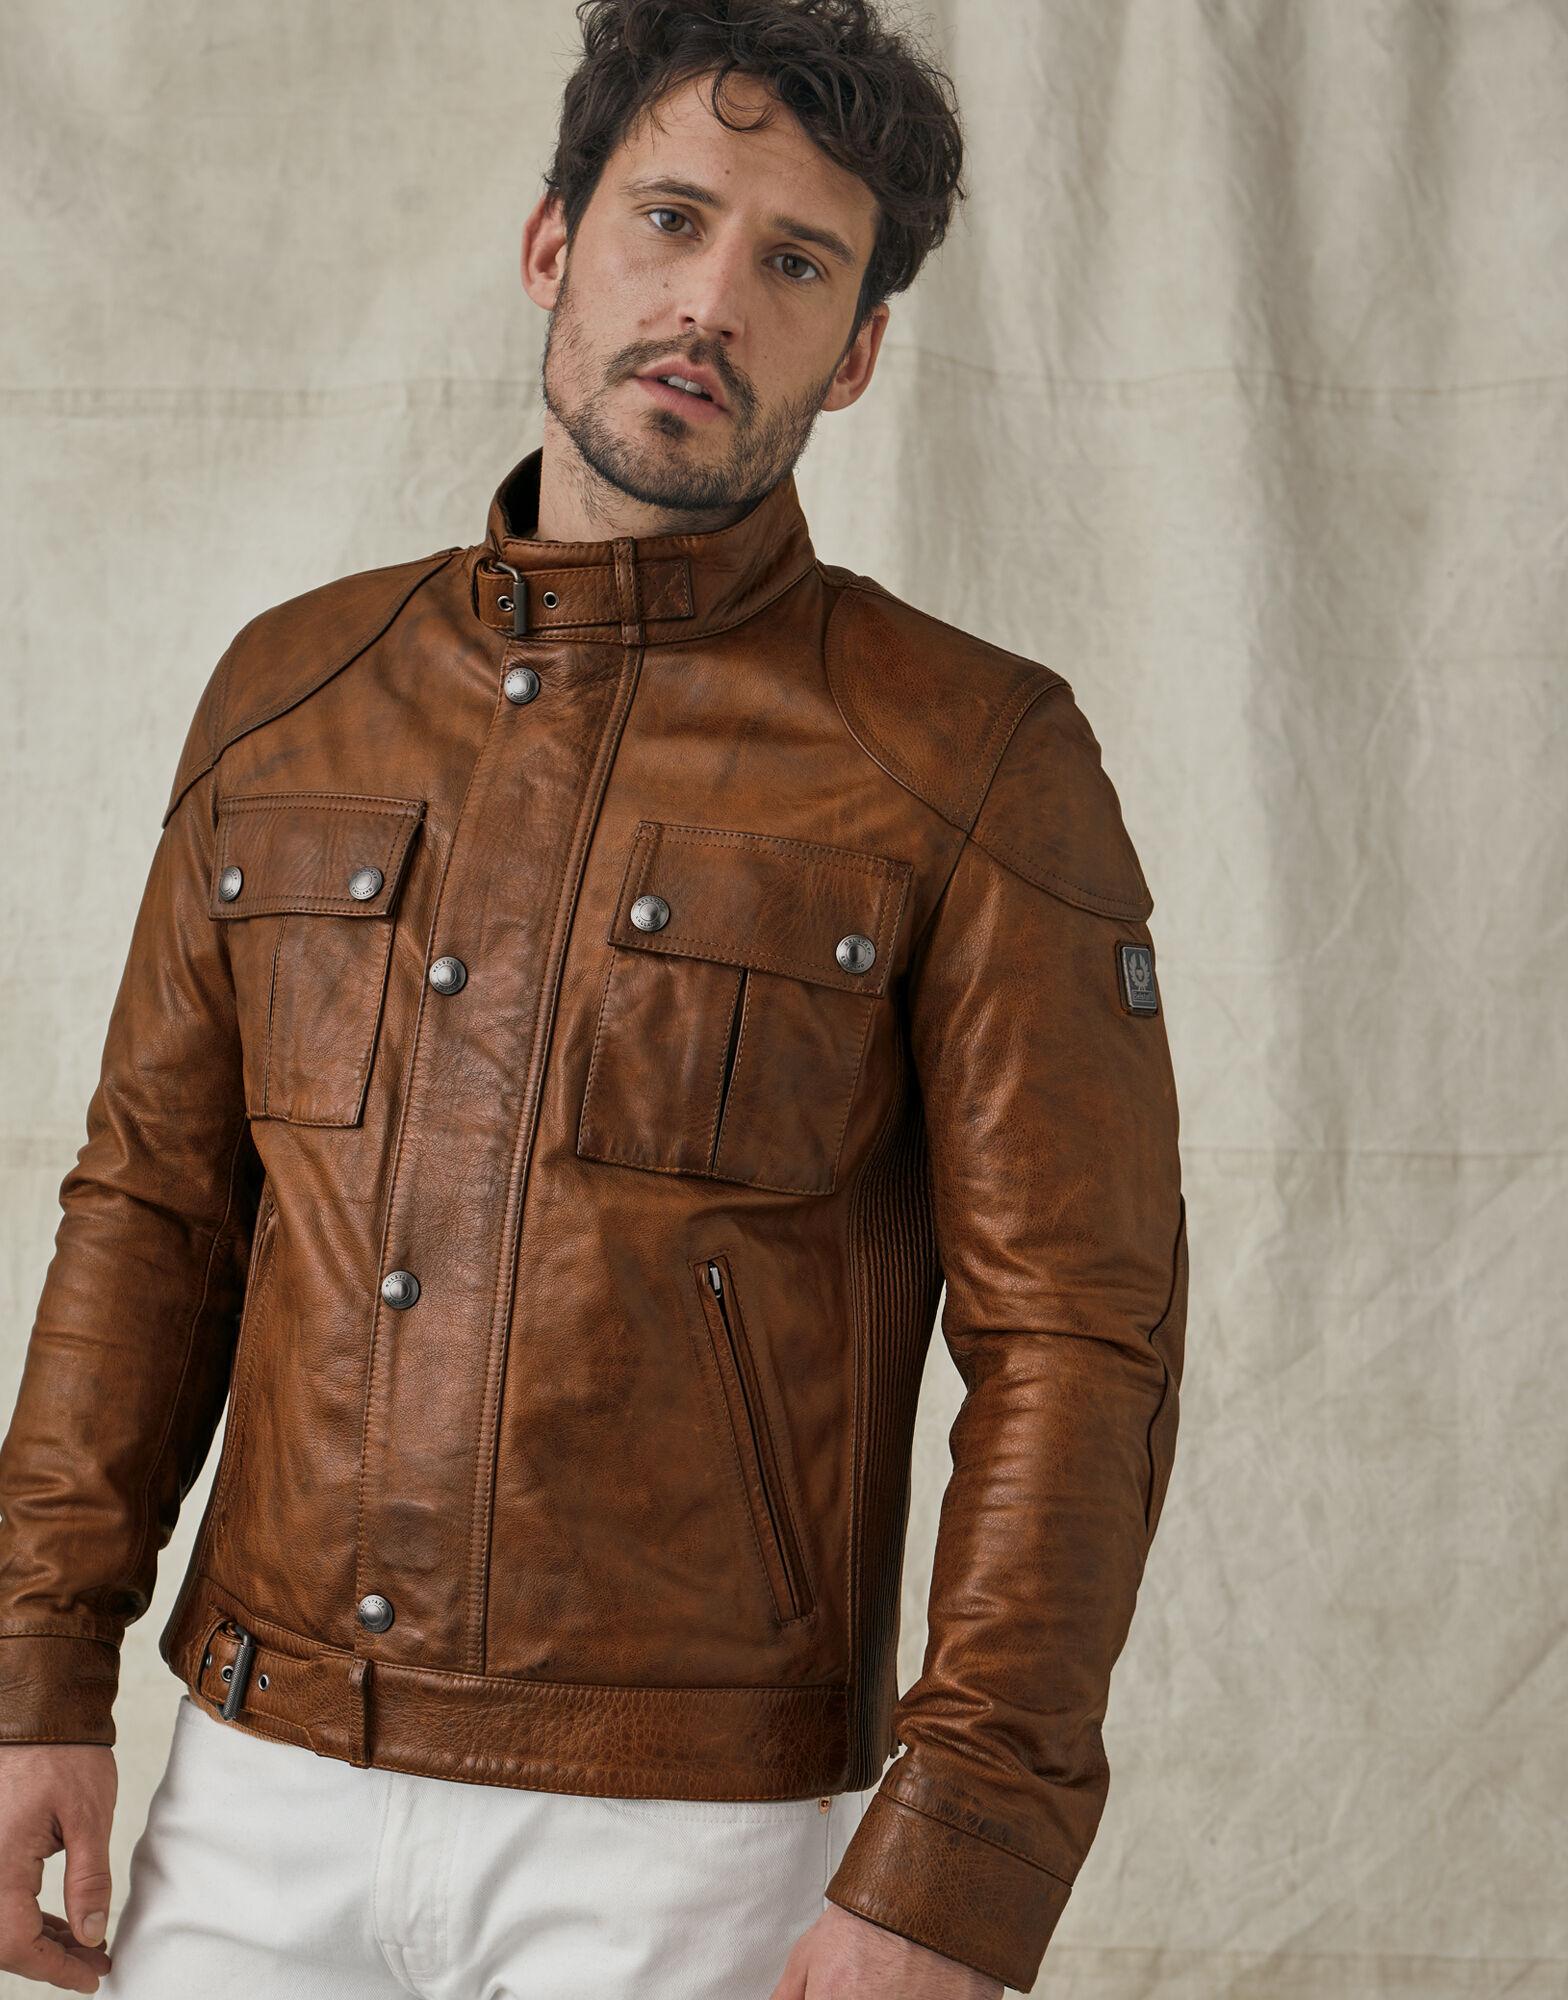 Belstaff Gangster 2.0 Leather Jacket in Cognac (Brown) for Men - Lyst